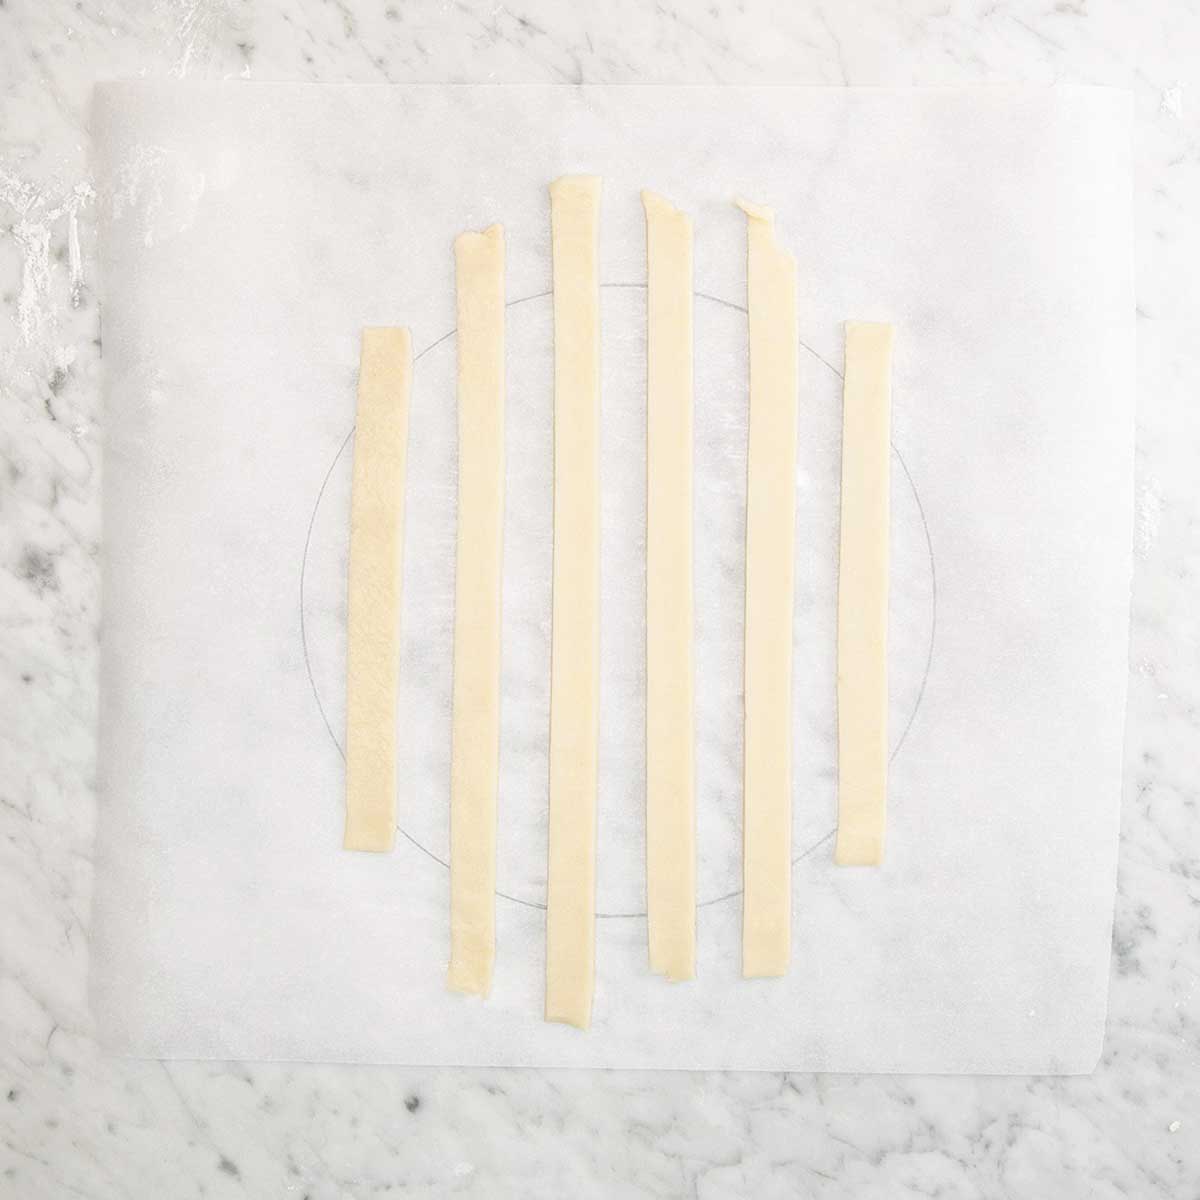 Six strips of dough arranged side by side for a lattice pie crust.